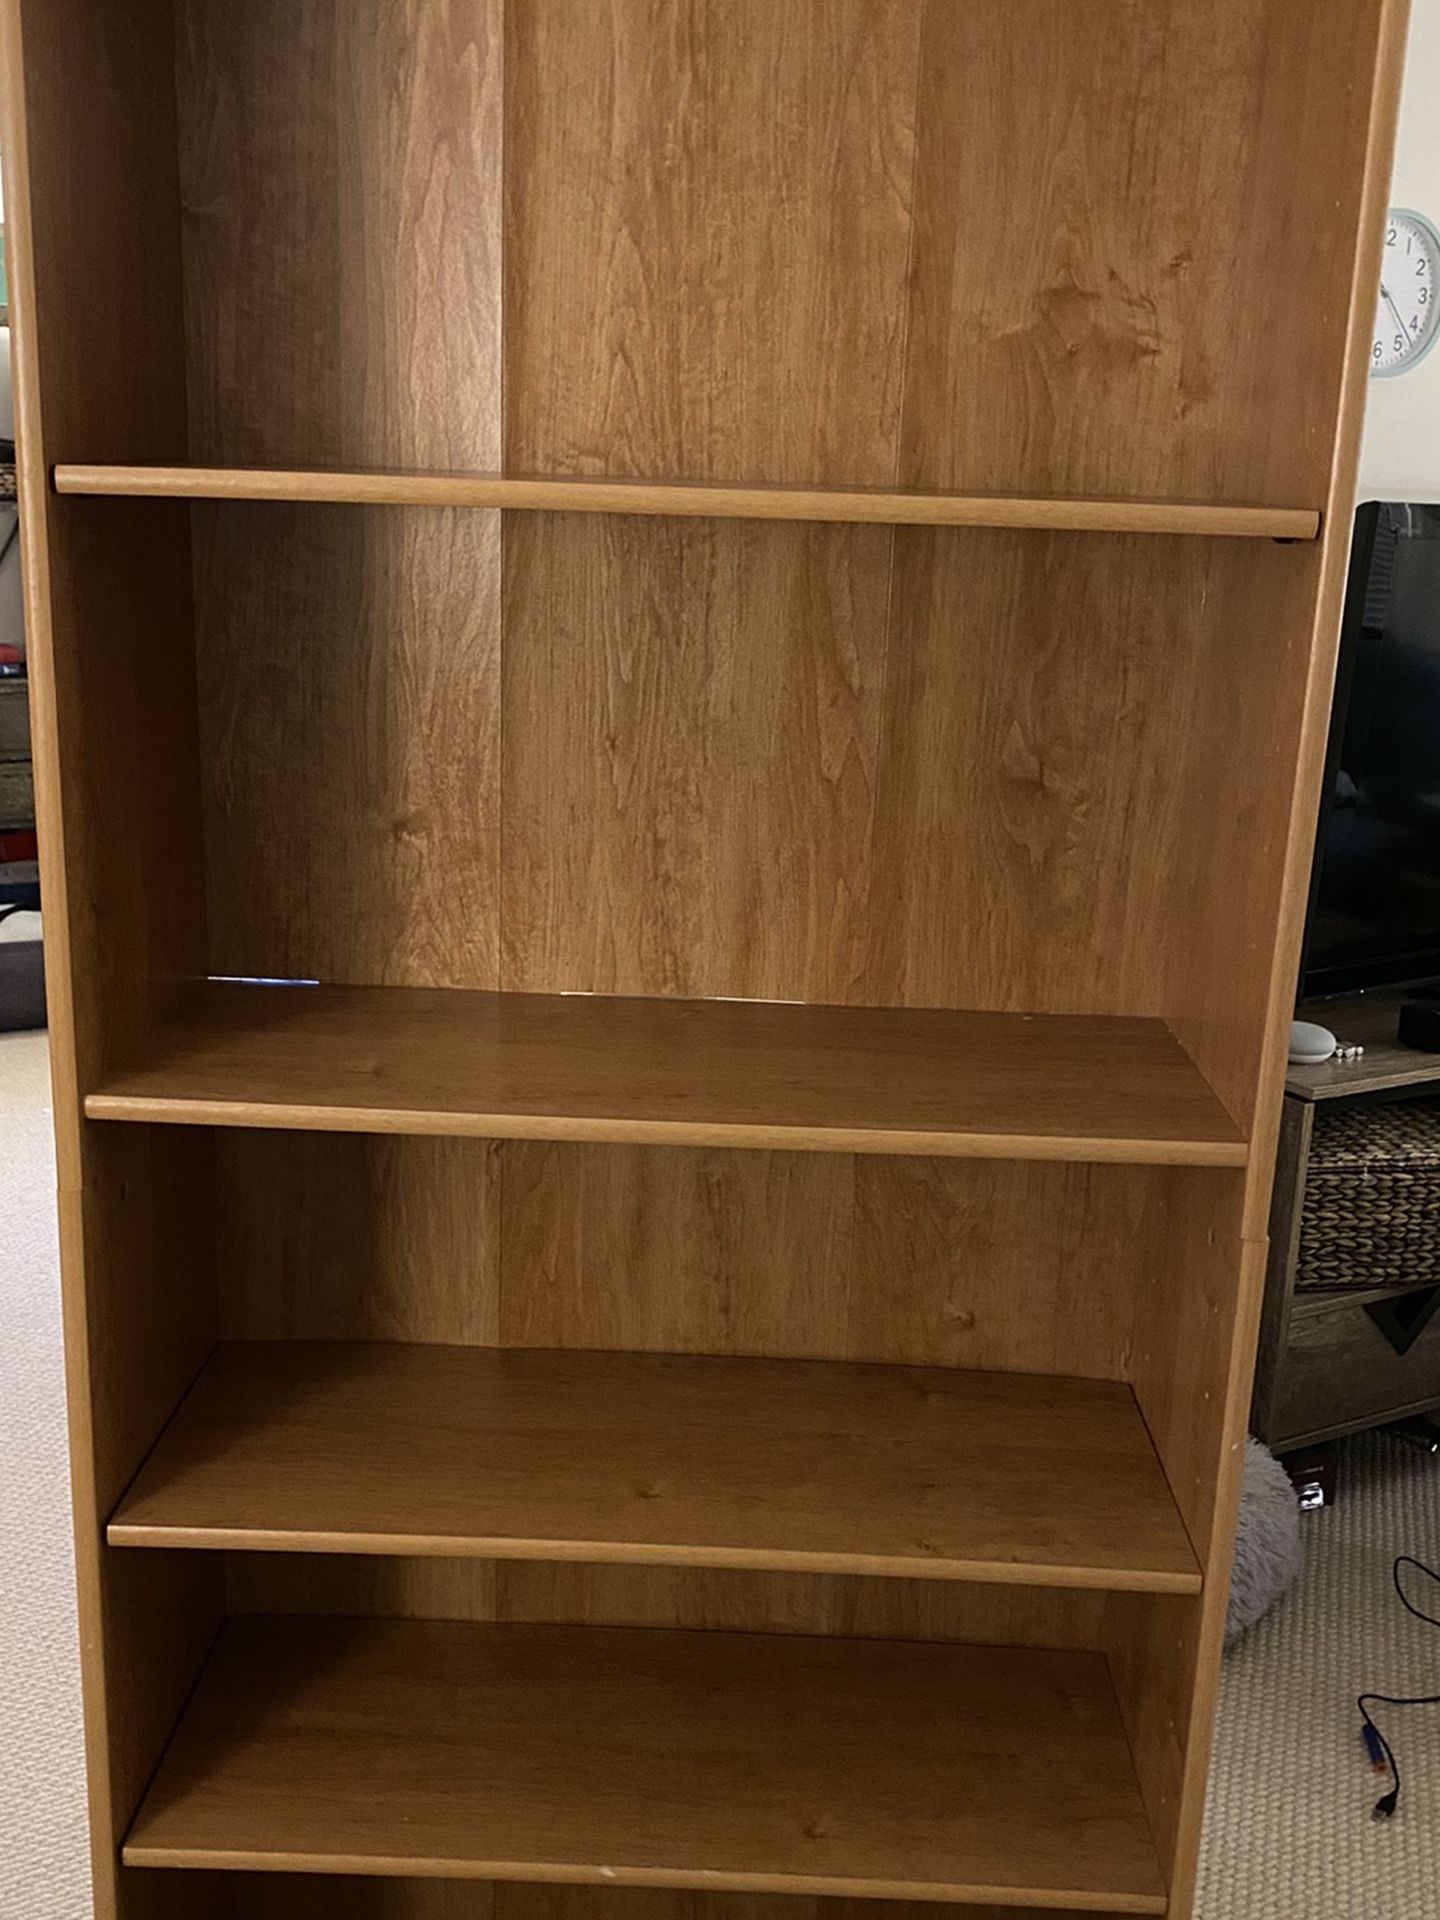 2 Natural Wood Book Shelves 6’ X 31” As A Pair Or Individually